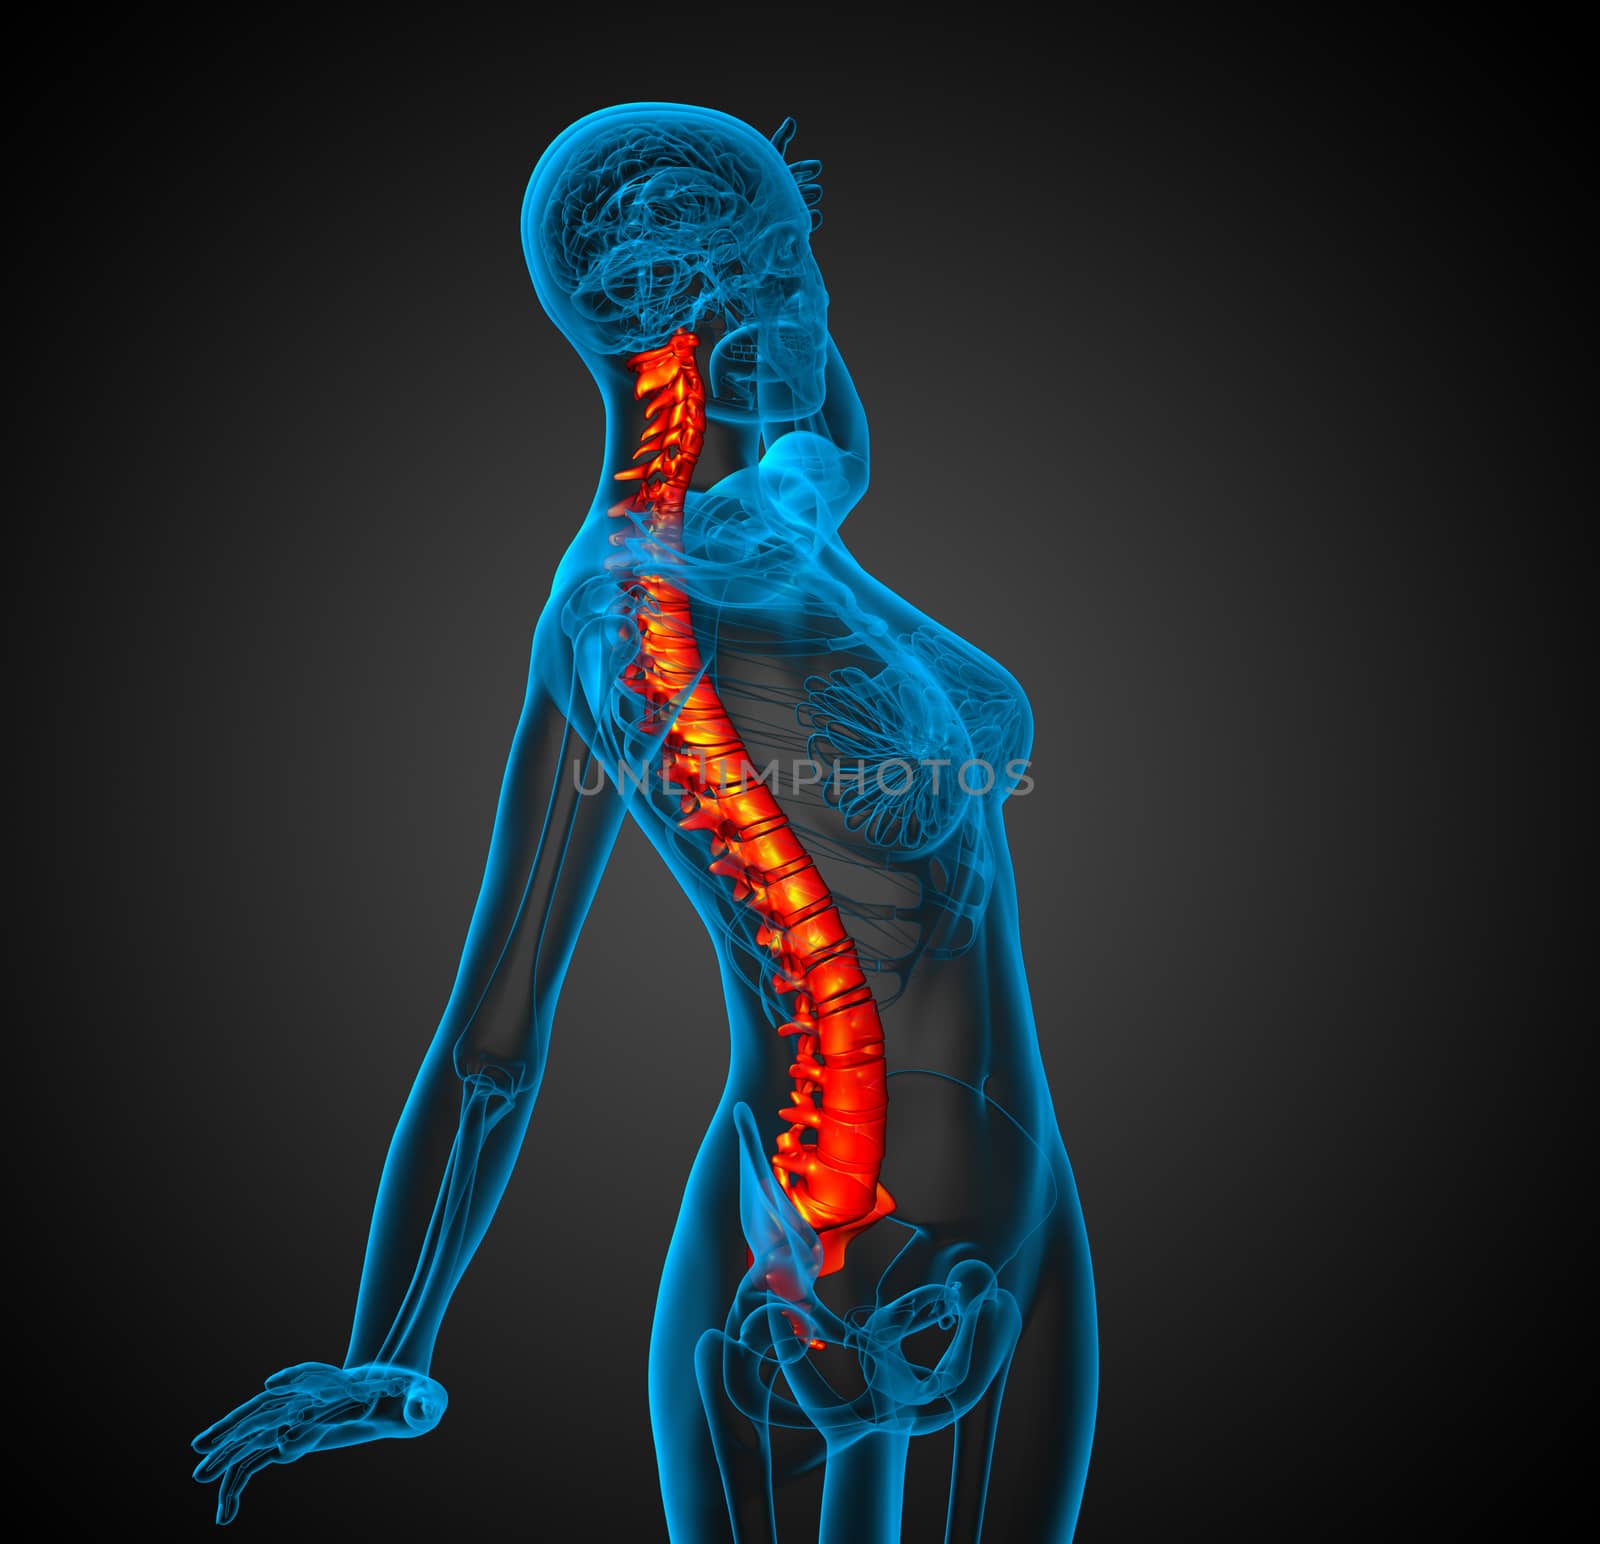 3d render medical illustration of the human spine by maya2008